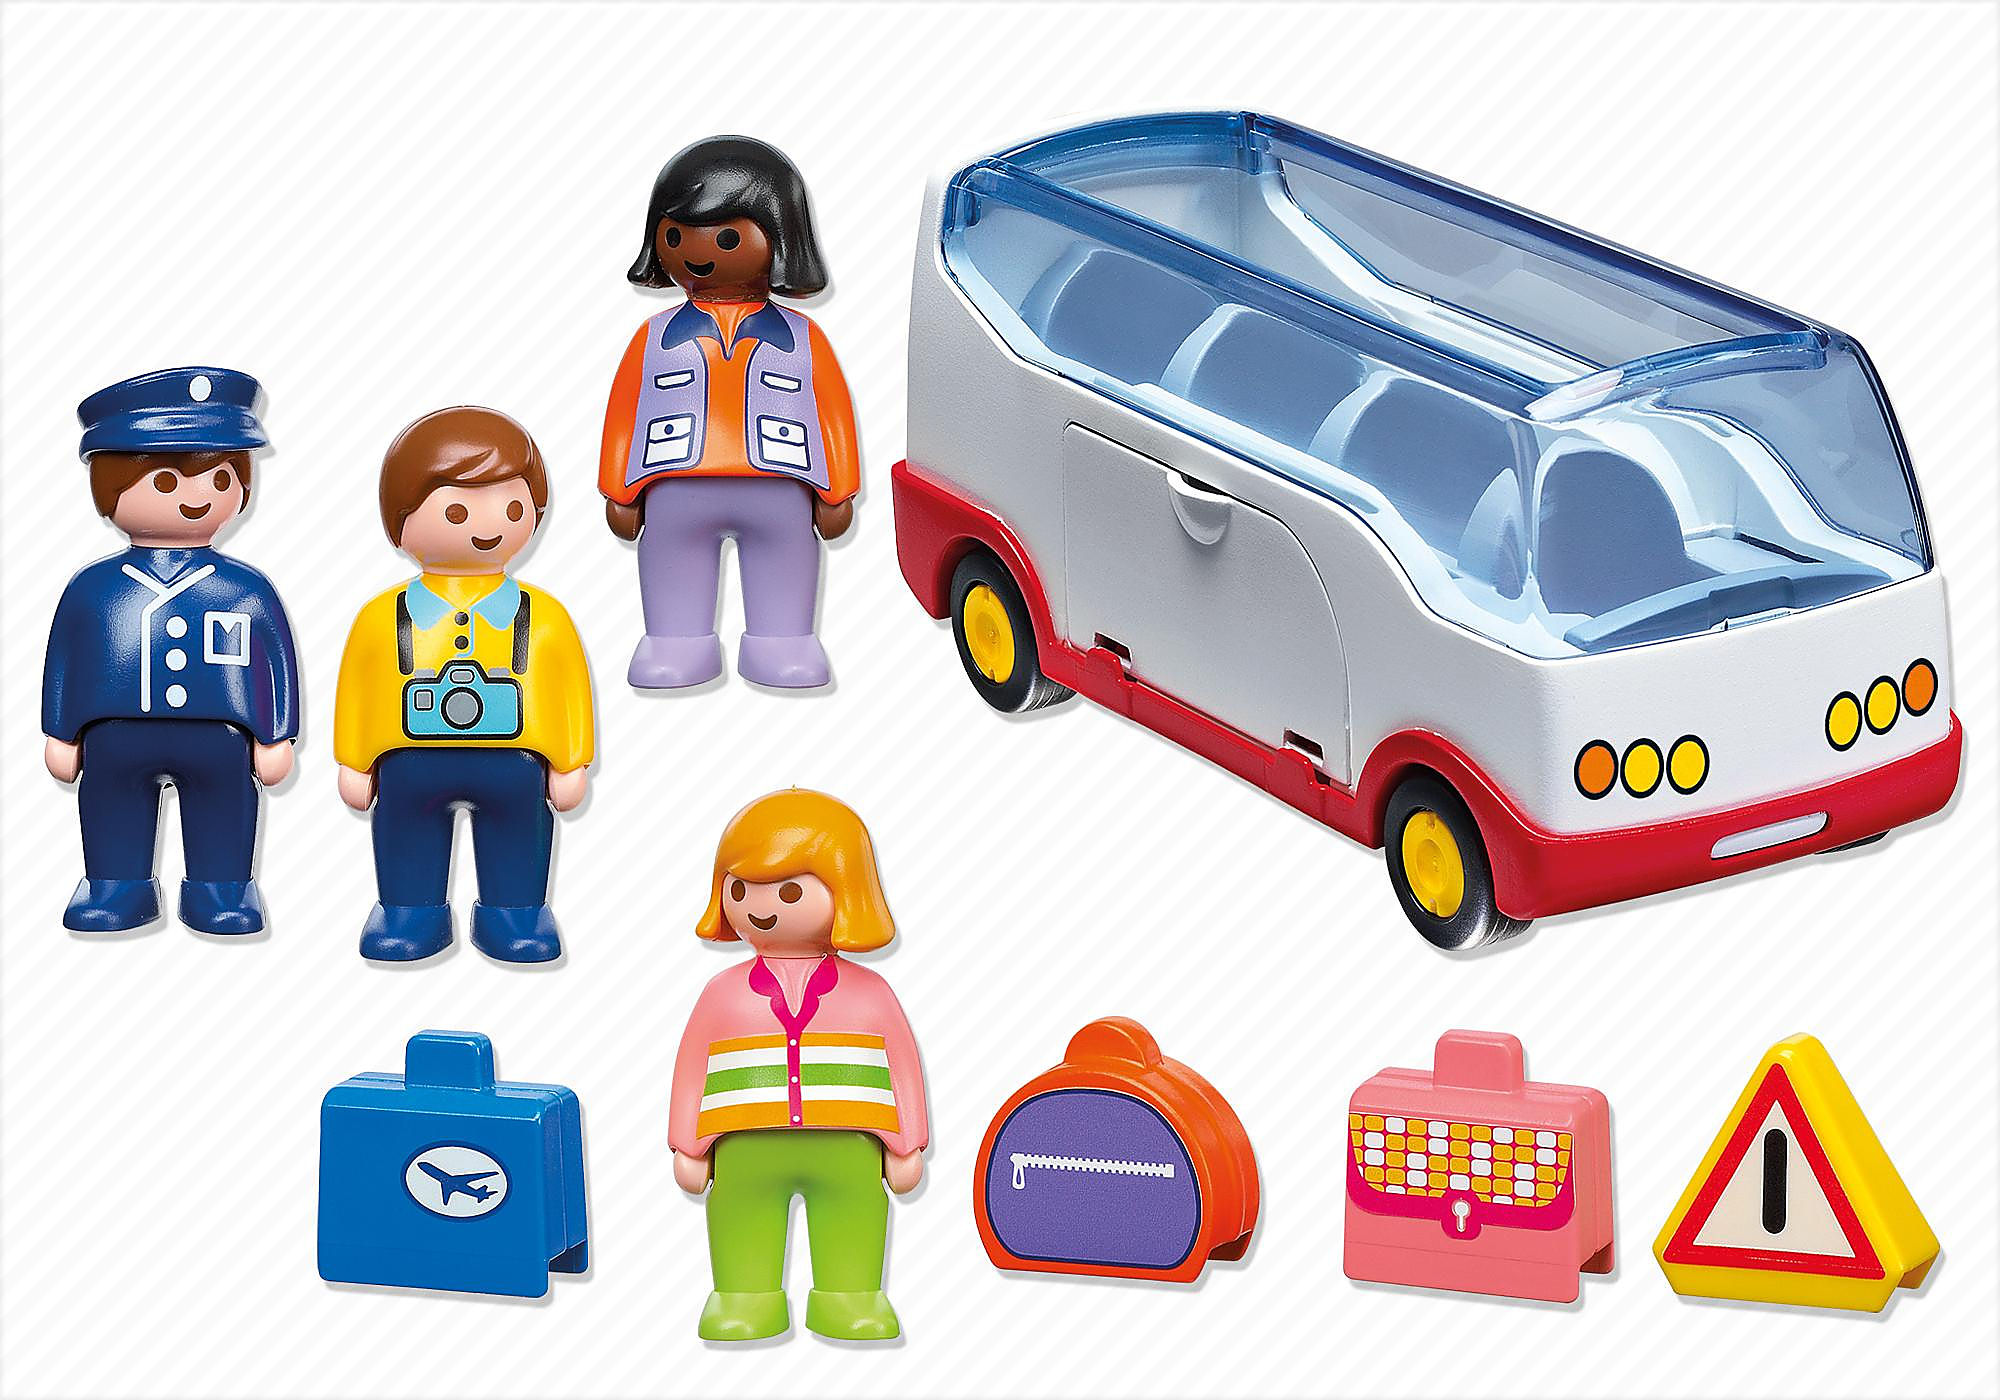 6773 Playmobil 123 Autocar de voyage - Playmobil